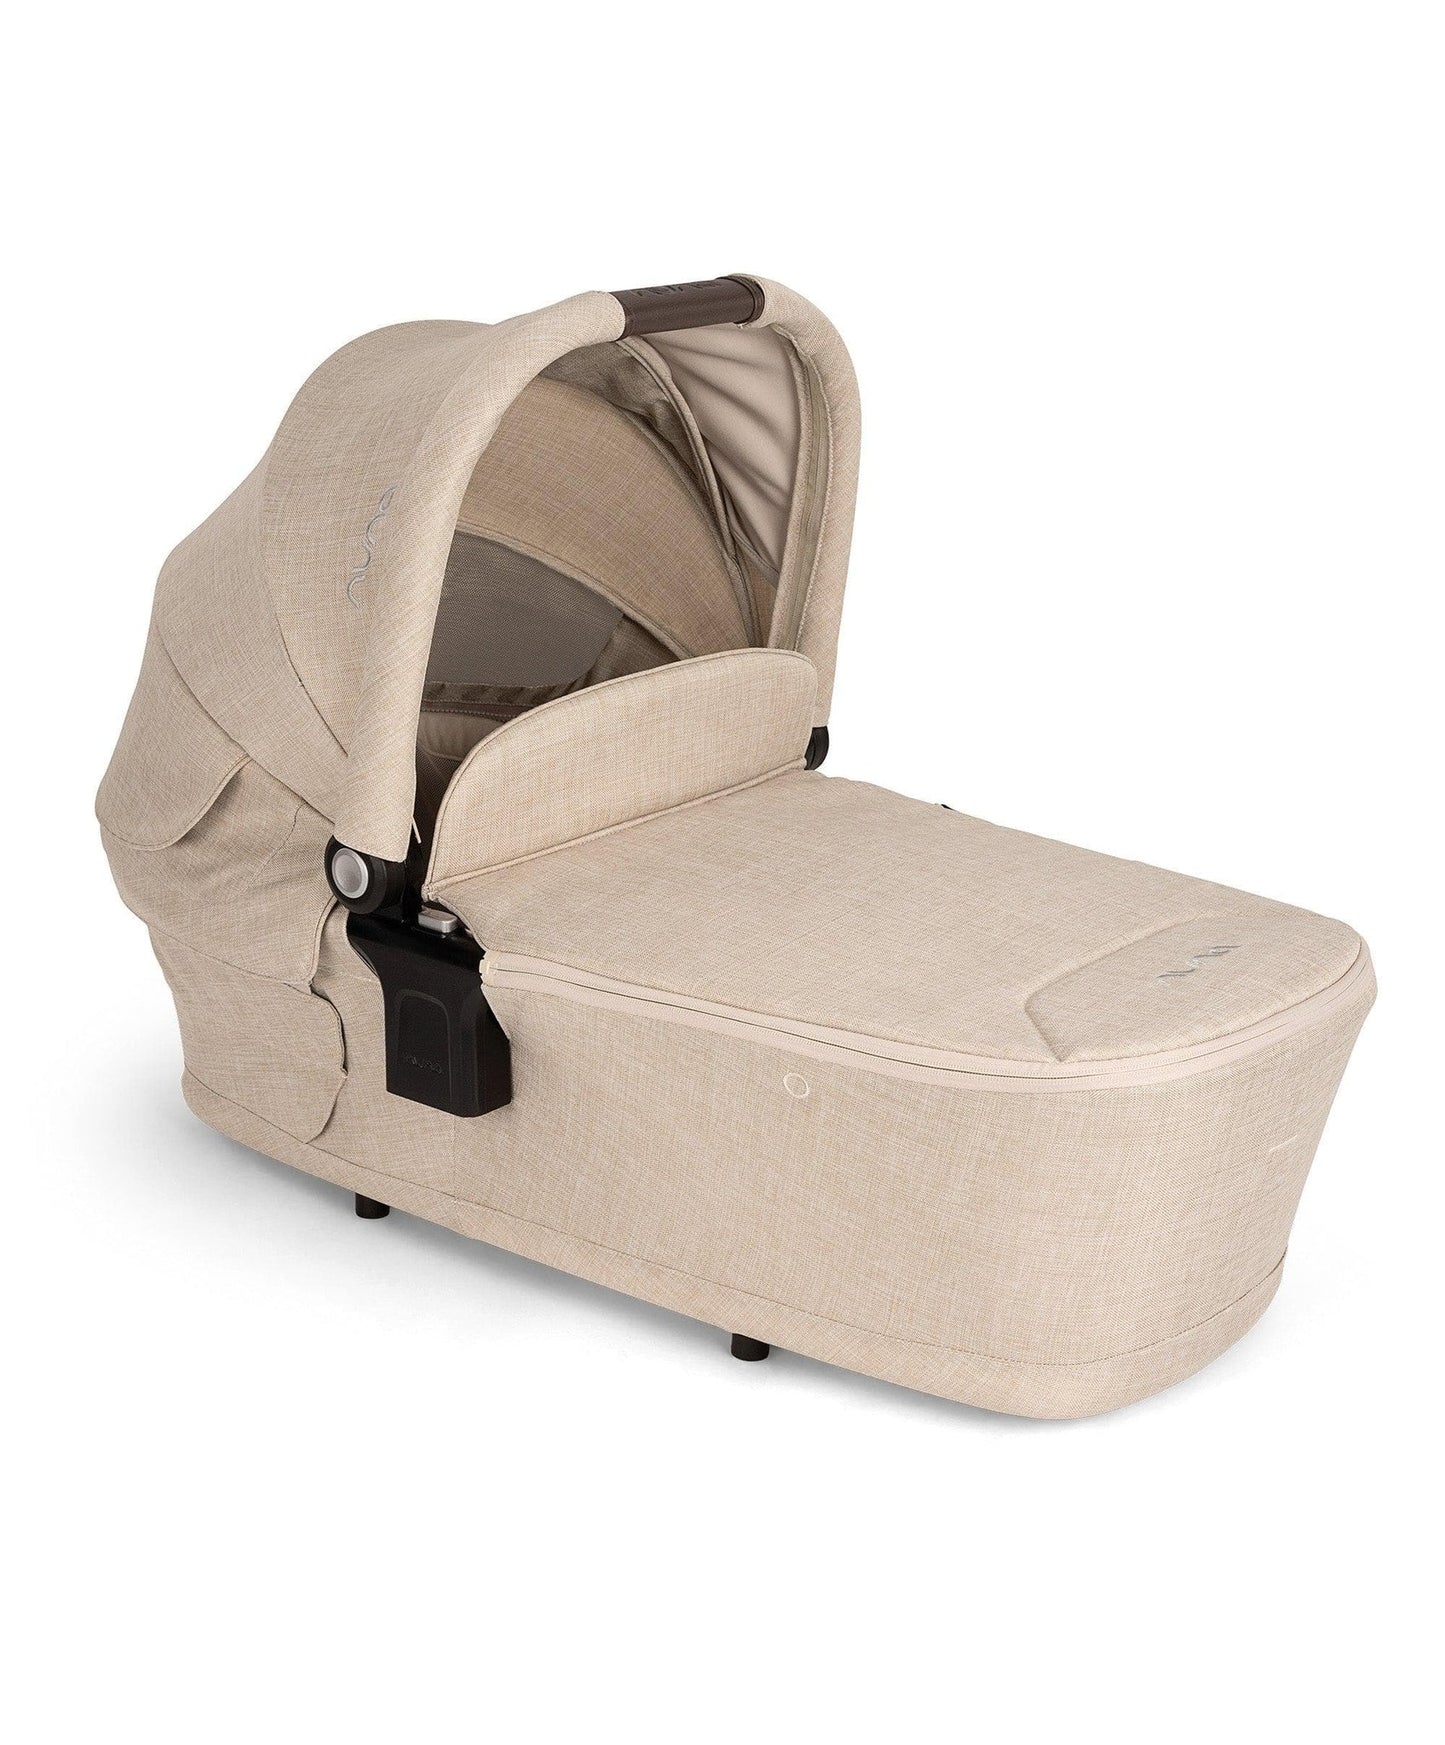 Nuna TRIV NEXT 3 Piece Travel Bundle + Nuna PIPA Urbn Infant Car Seat